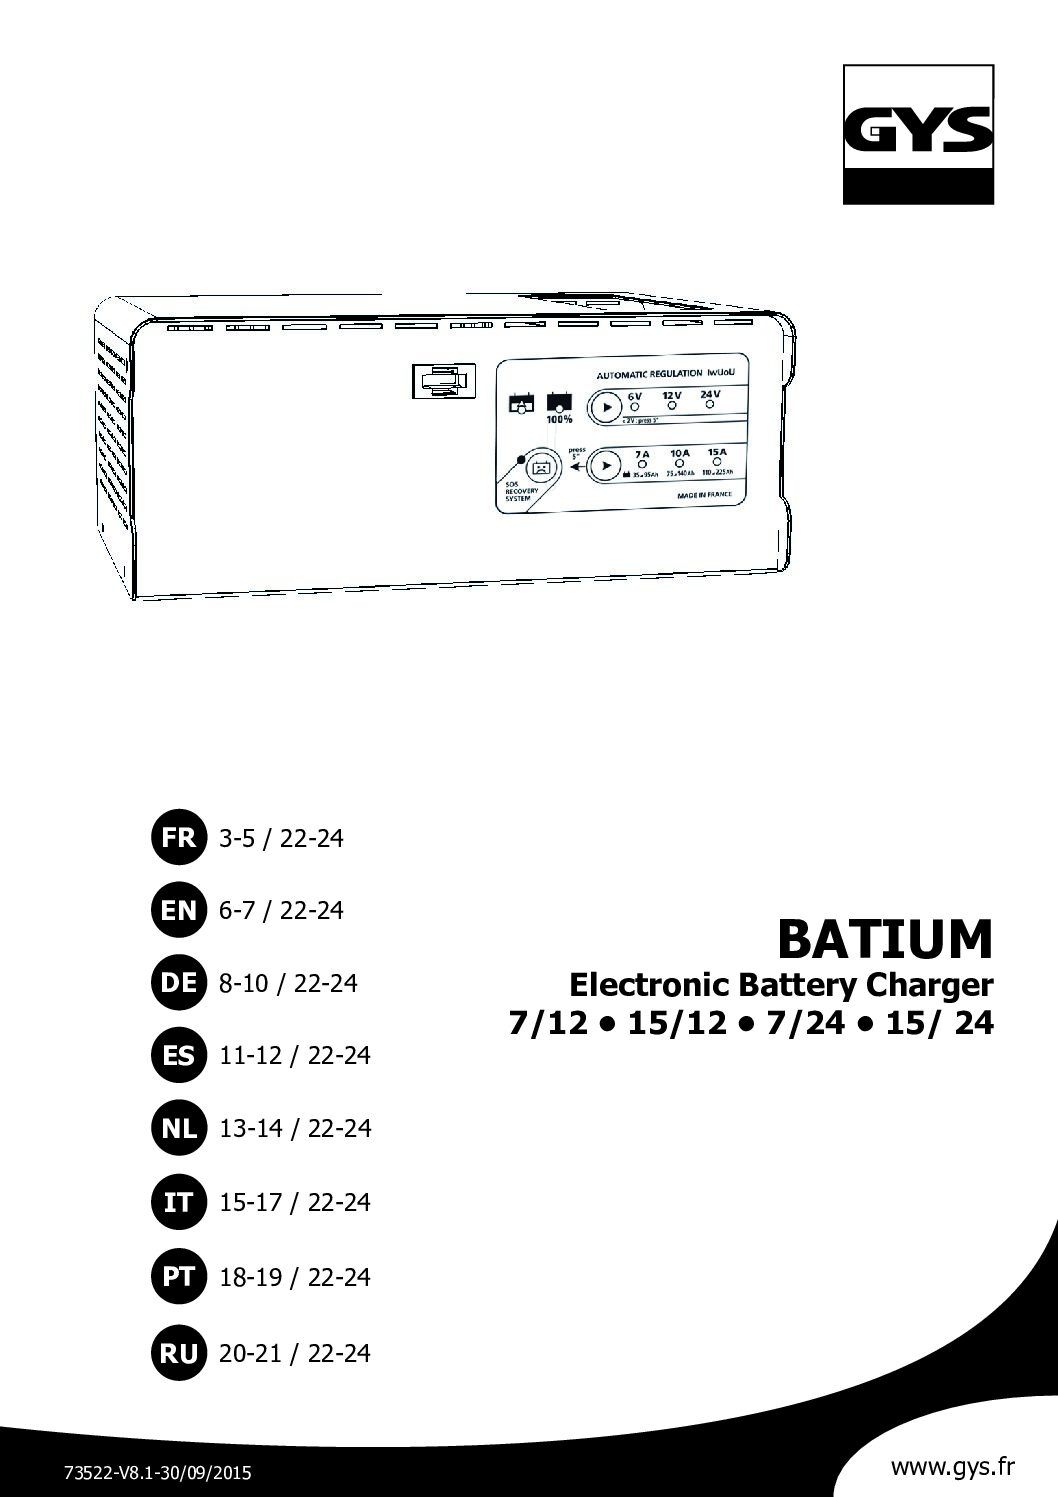 GYS Batium 15.24 Bedienungsanleitung